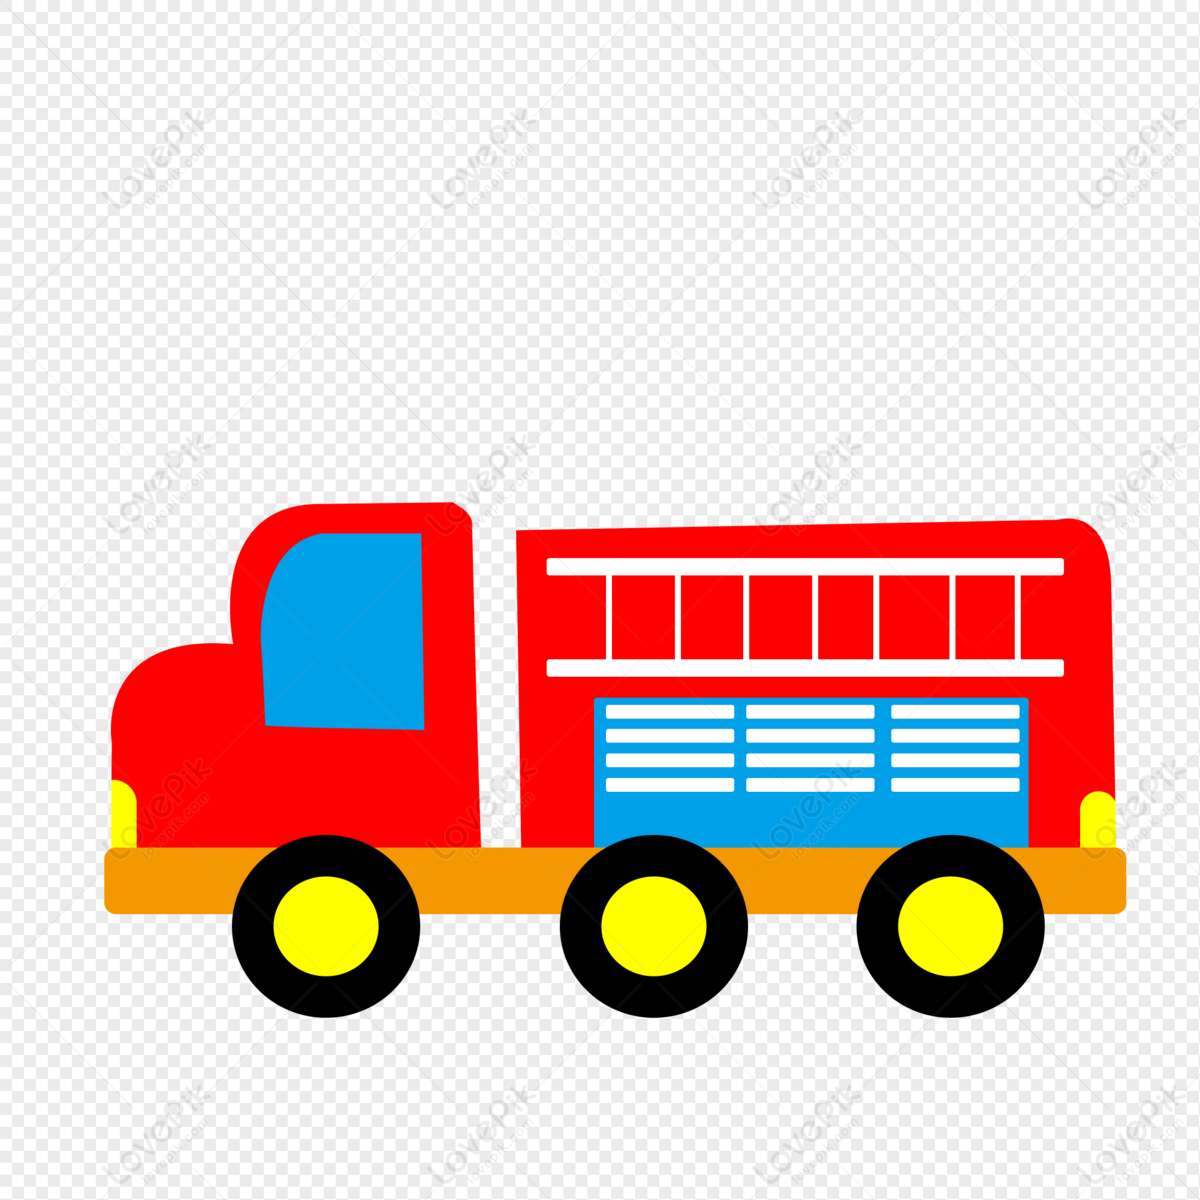 Construction Vehicles PNG Transparent Images Free Download